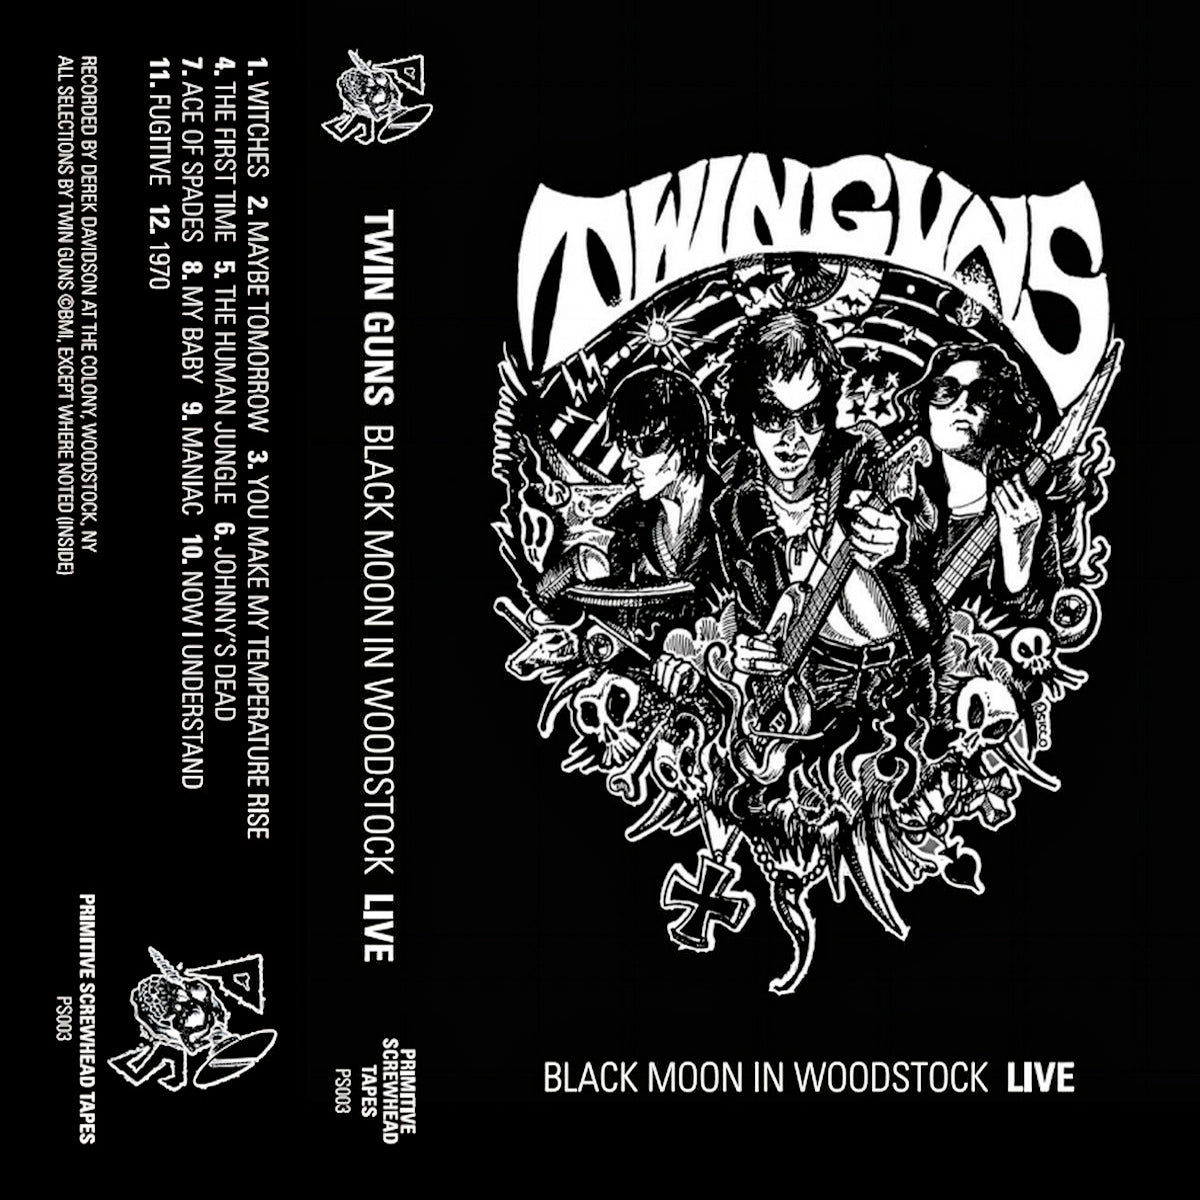 Twin Guns - Black Moon in Woodstock Live CS TAPE ~EX CRAMPS + MAKERS!